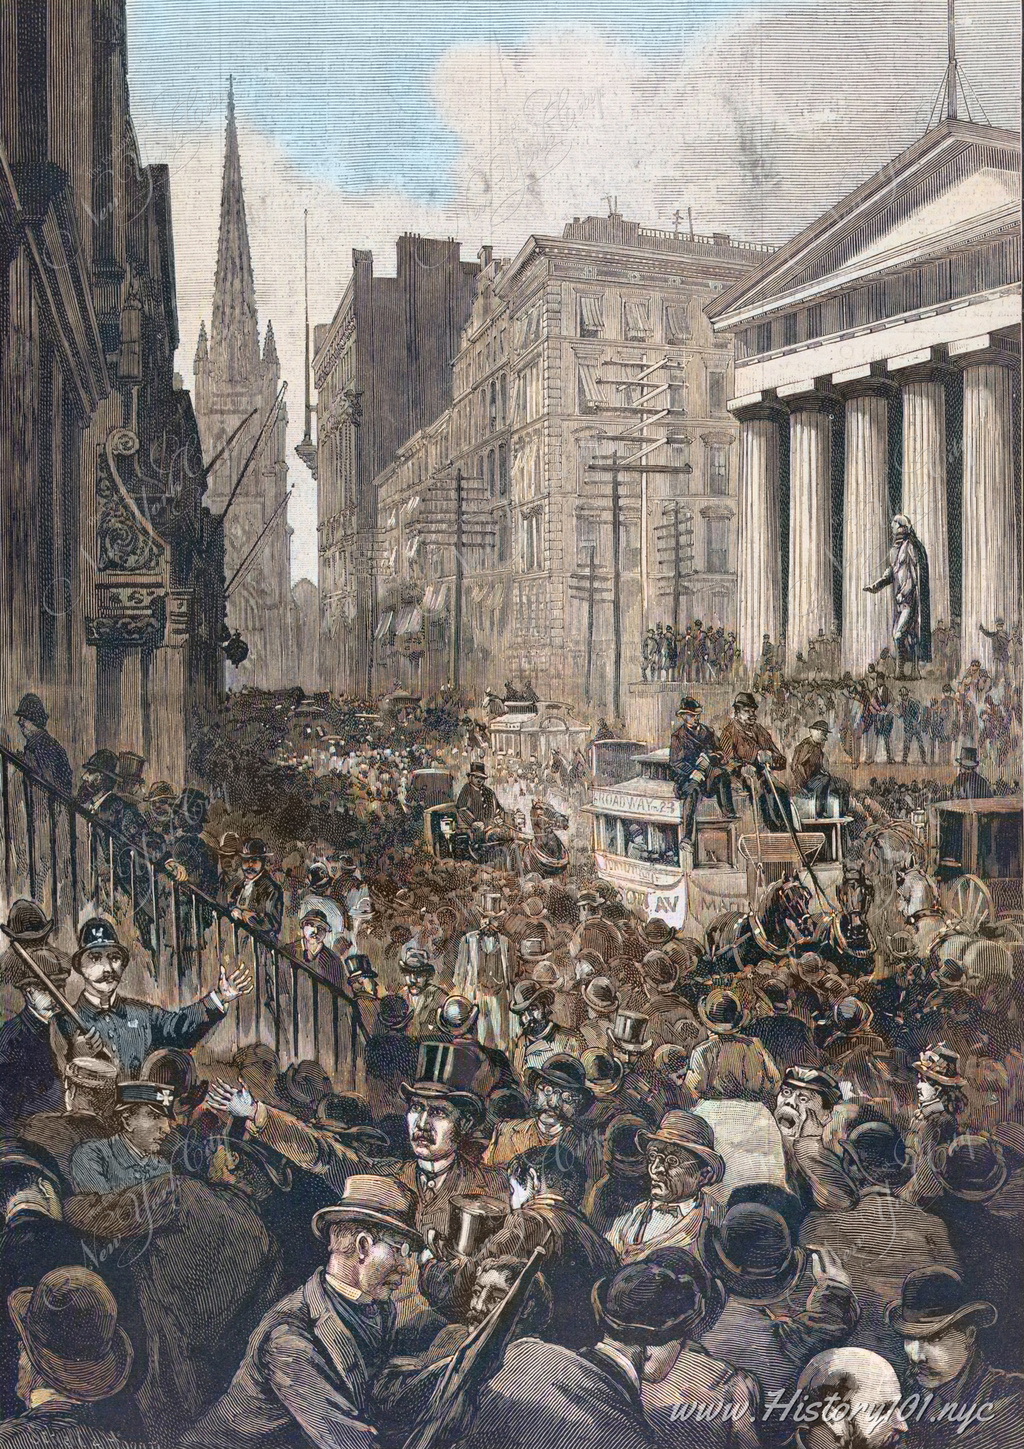 Explore the 1884 Wall Street panic through Schell & Hogan's illustration in Harper's Weekly, capturing New York City's historic financial turmoil.